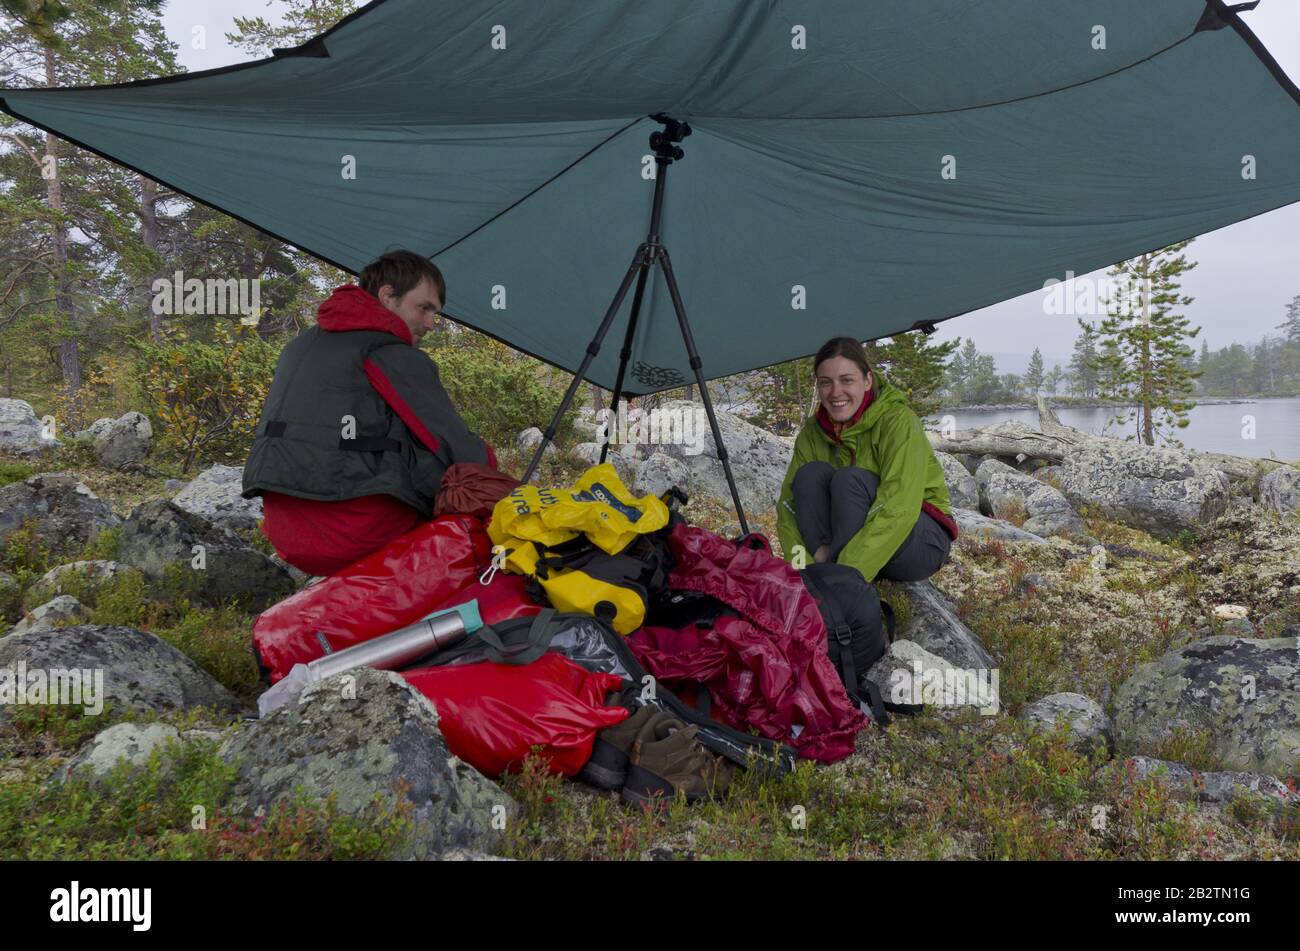 Paar sitzt im Regen unter einer Zeltplane (TARP) am vedere Rogen, Naturreservat Rogen, Haerjedalen, Schweden, Agosto 2011 Foto Stock